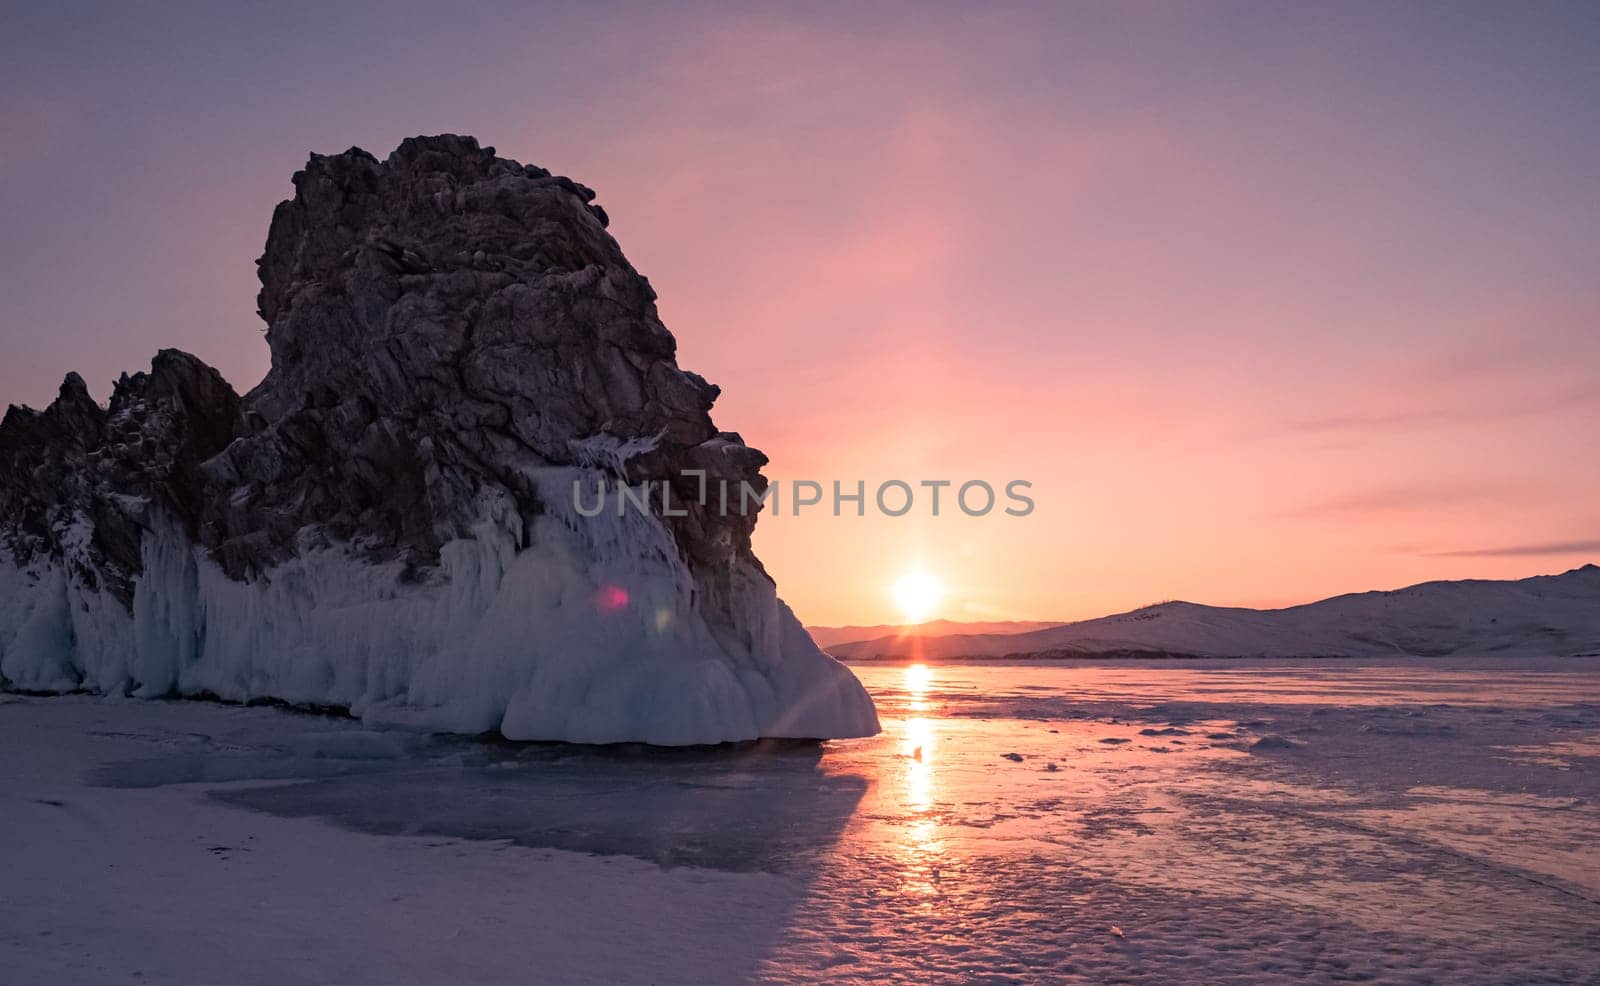 Ogoy island on winter Baikal lake. Winter scenery of Dragon Tail Rock on Ogoy island during sunrise at Lake Baikal.